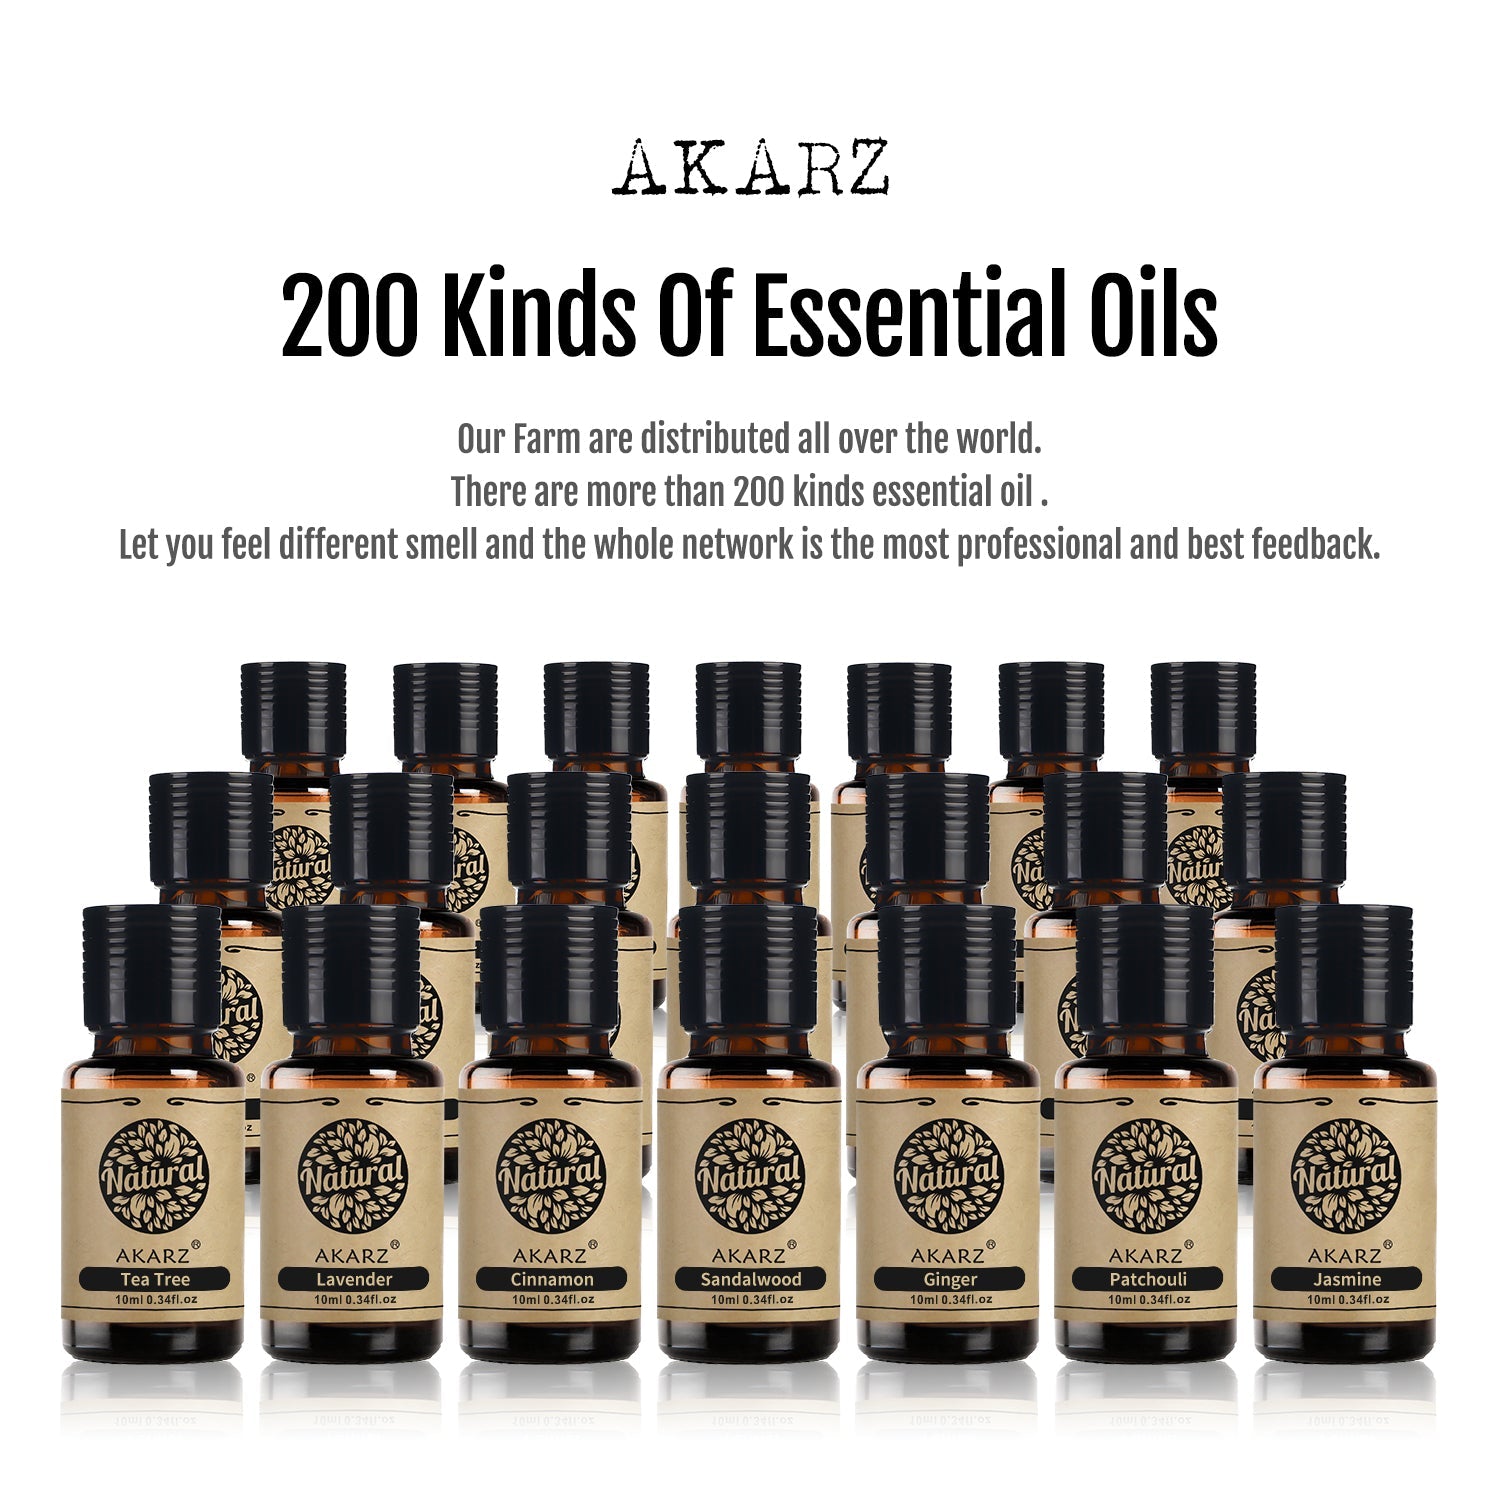 AKARZ natural Freesia essential oil aromatic for aromatherapy diffusers  body skin care aroma Freesia oil